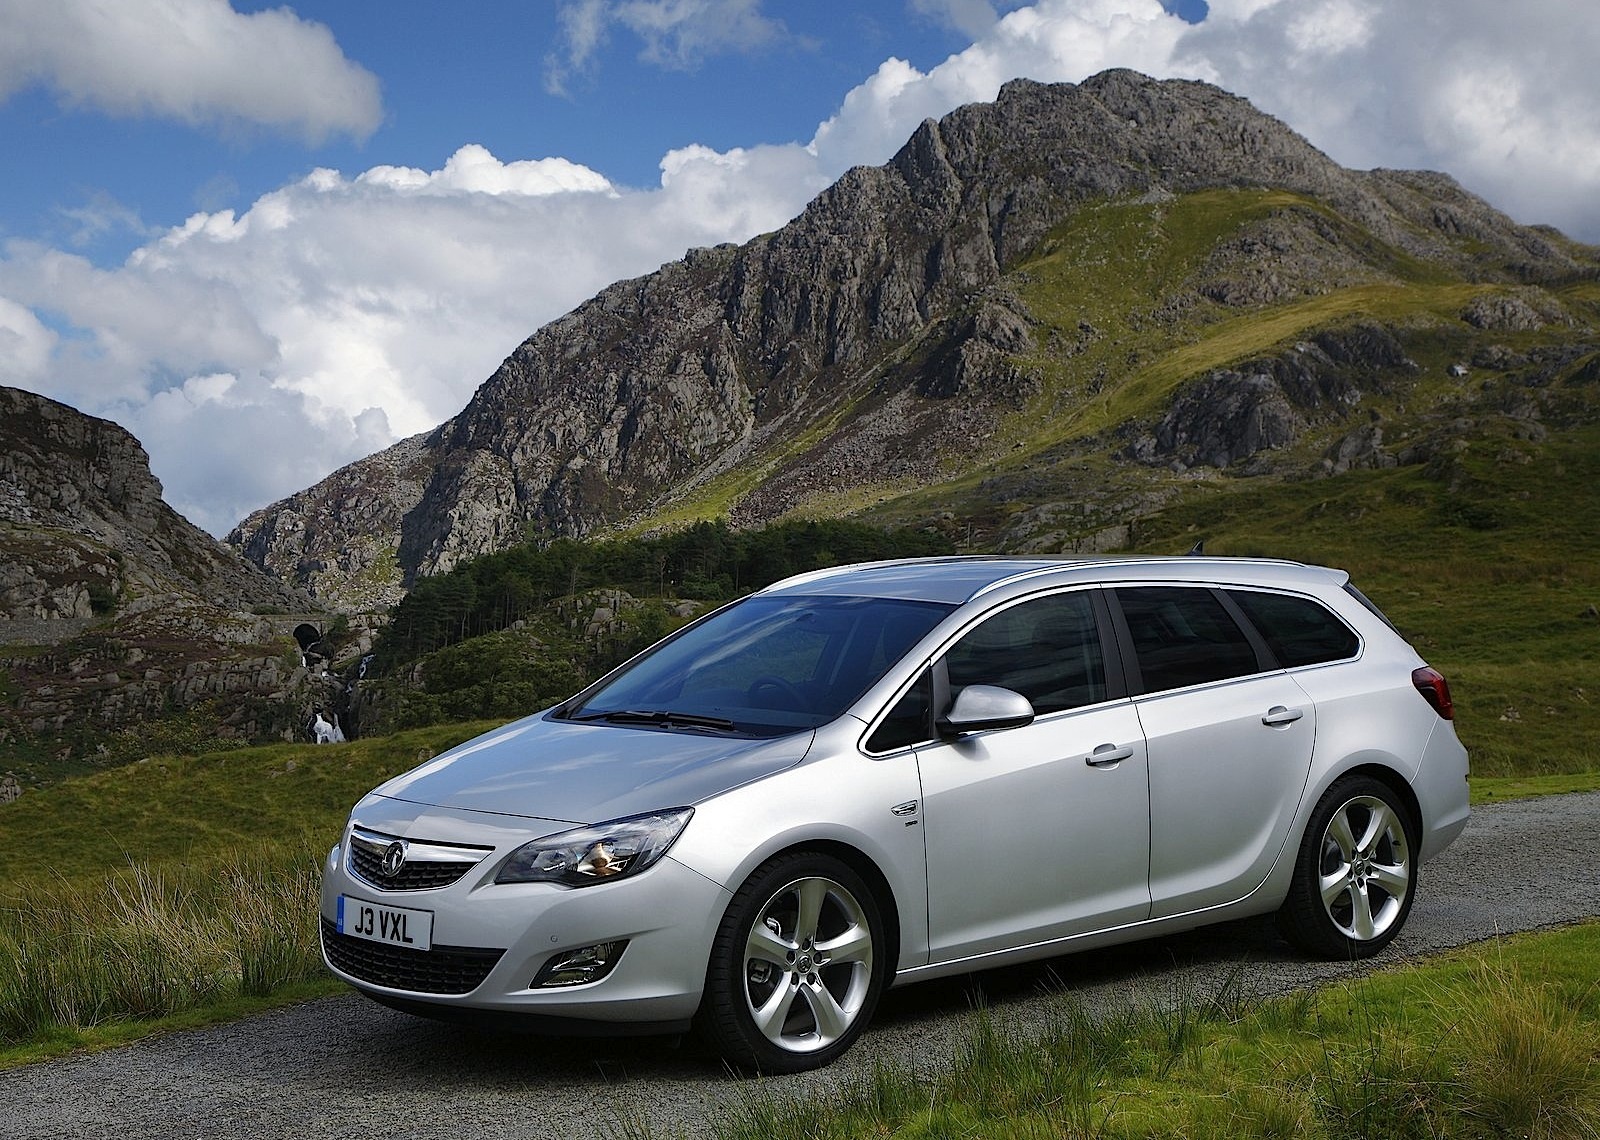 2010 Opel Astra J Sports Tourer 1.6 (115 Hp)  Technical specs, data, fuel  consumption, Dimensions